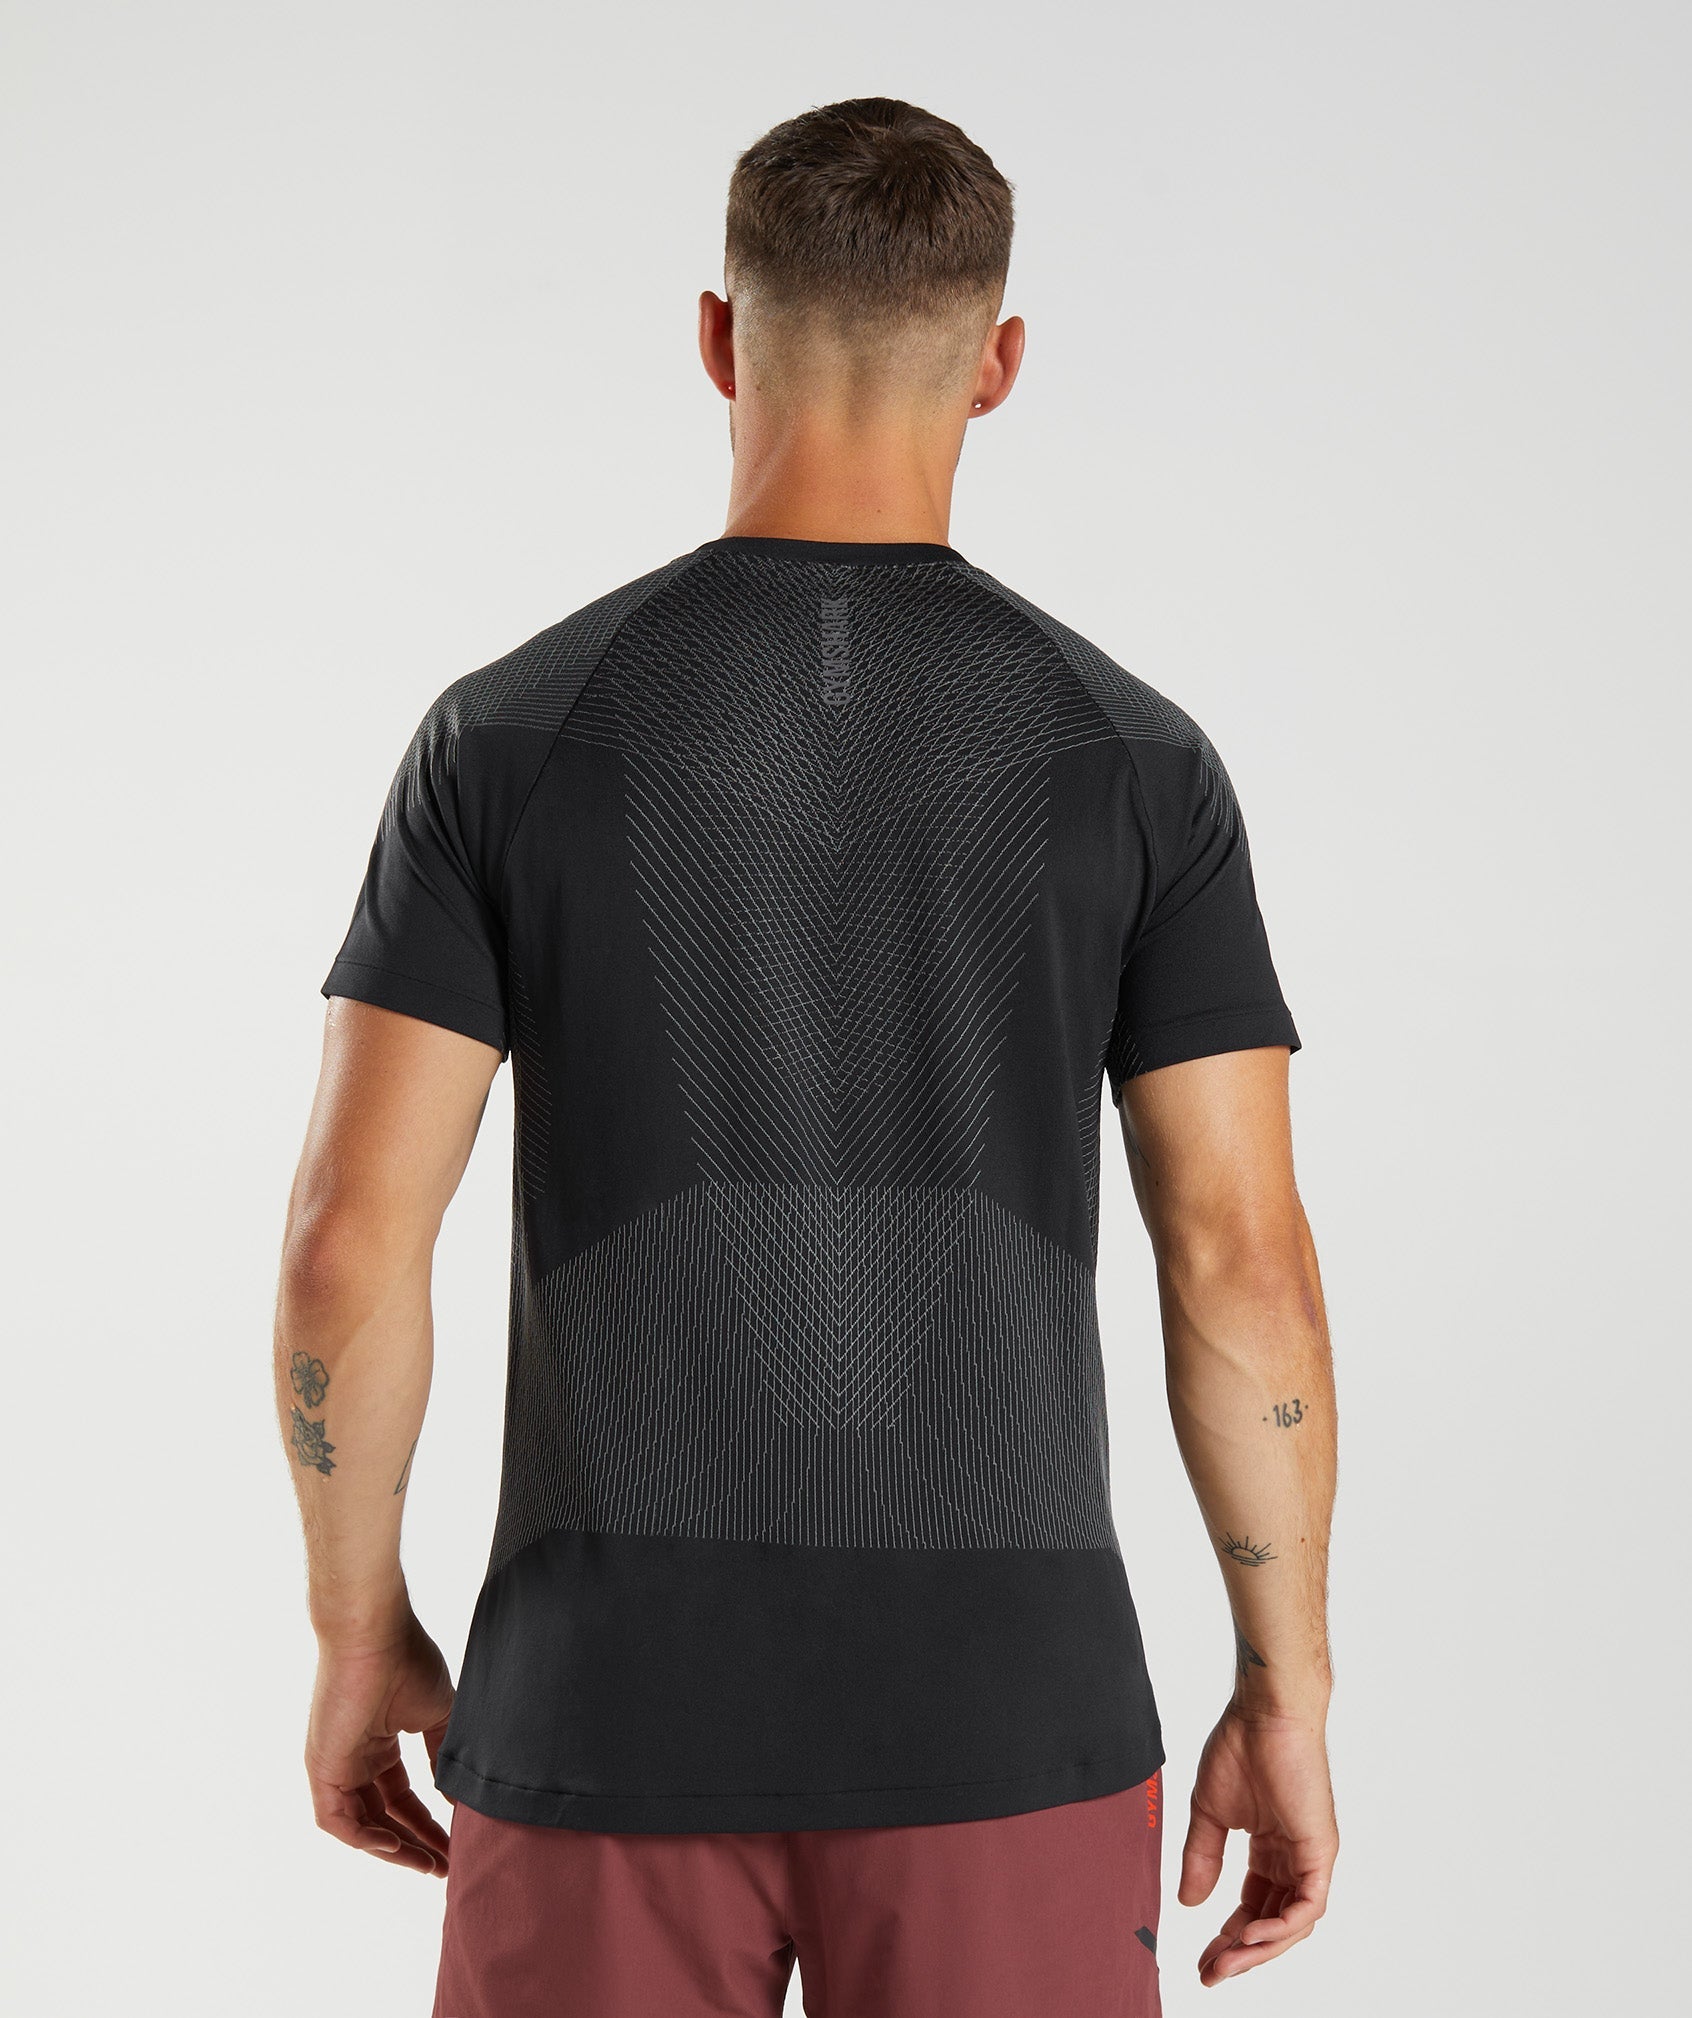 Apex Seamless T-Shirt in Black/Silhouette Grey